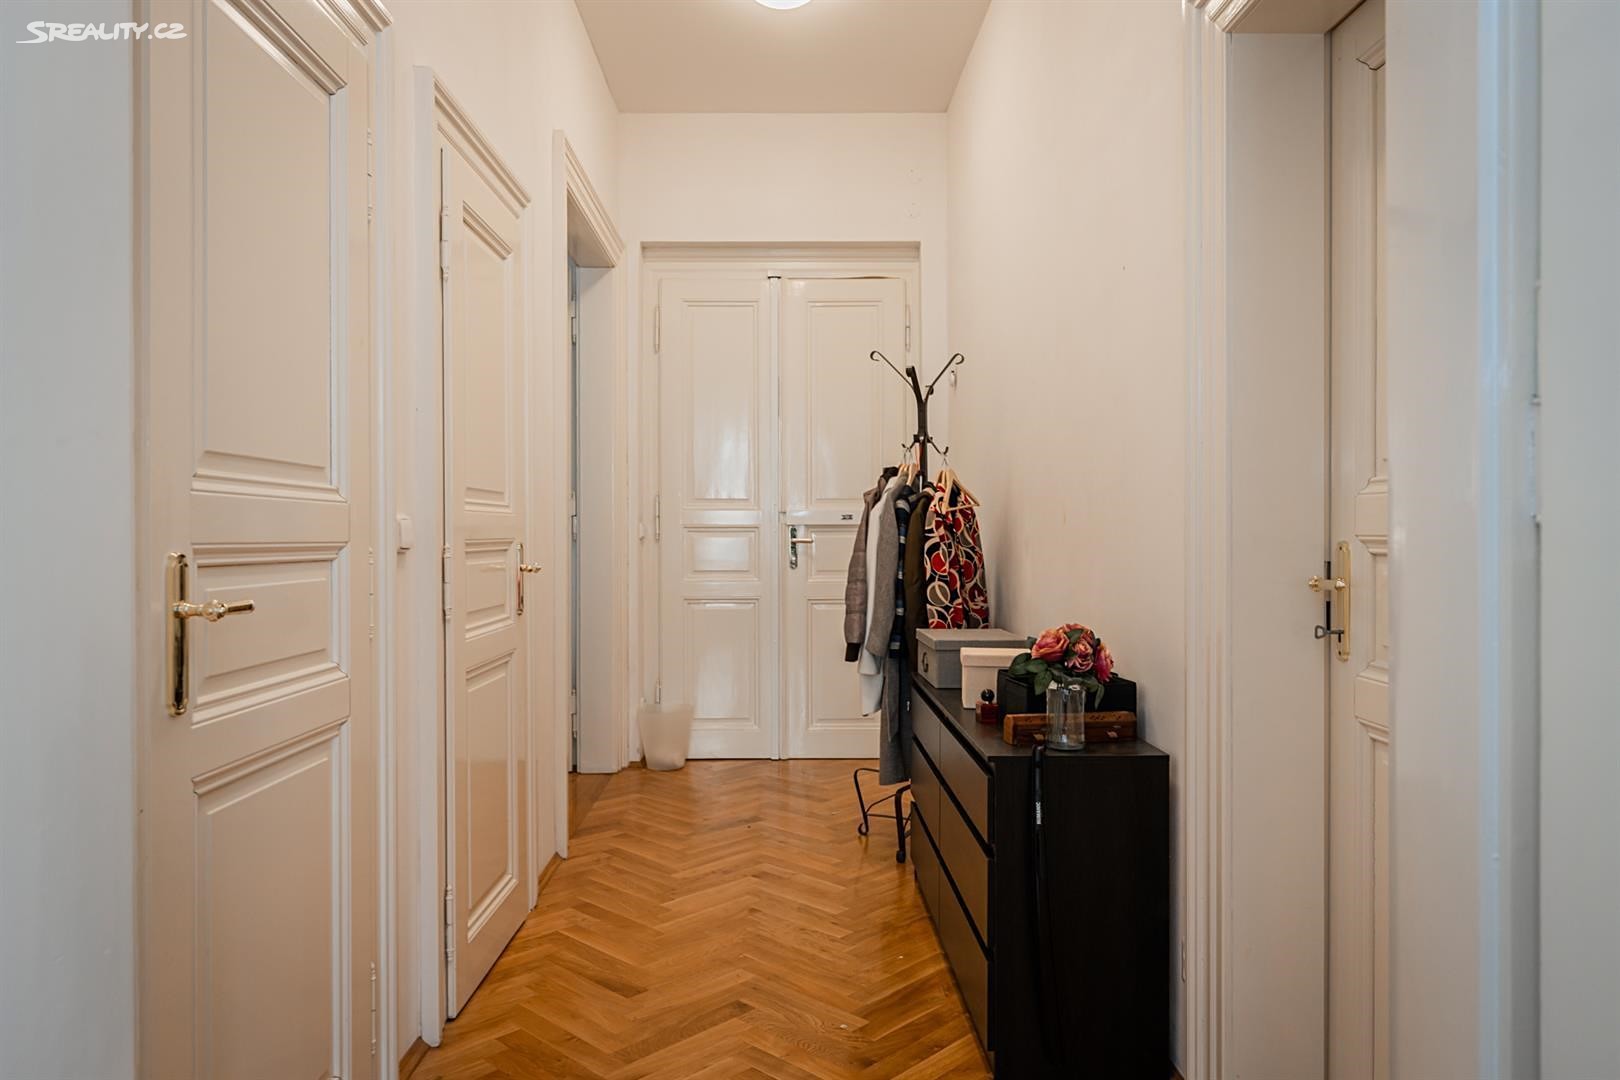 Pronájem bytu 2+1 70 m², Legerova, Praha 2 - Vinohrady